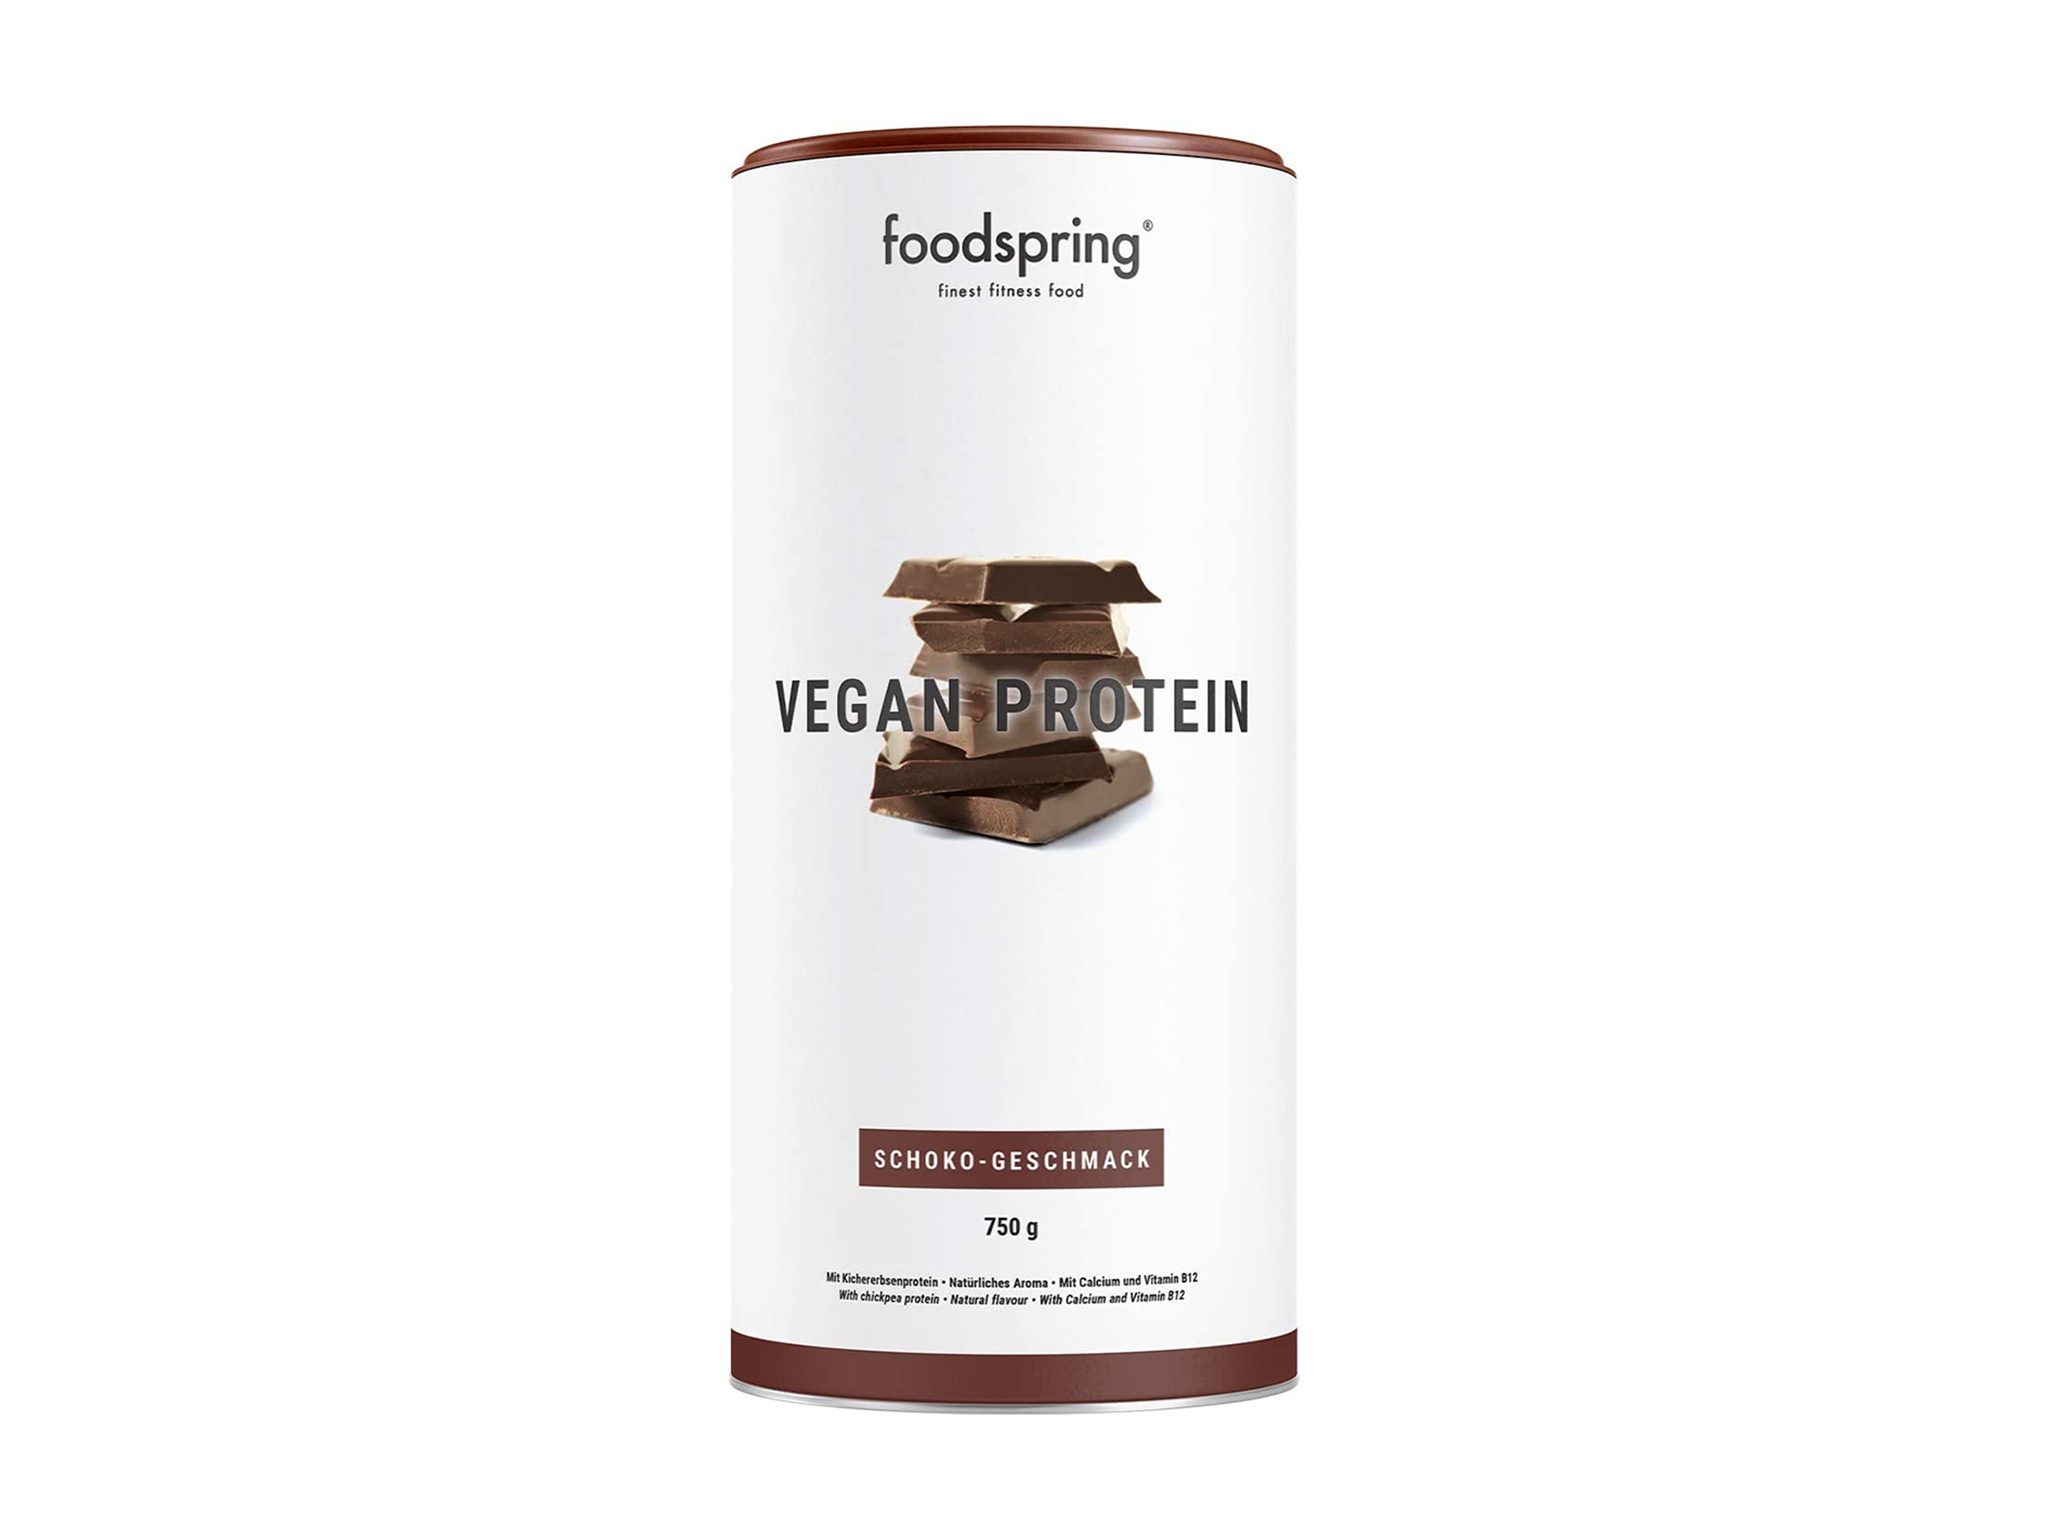 Vegan protein